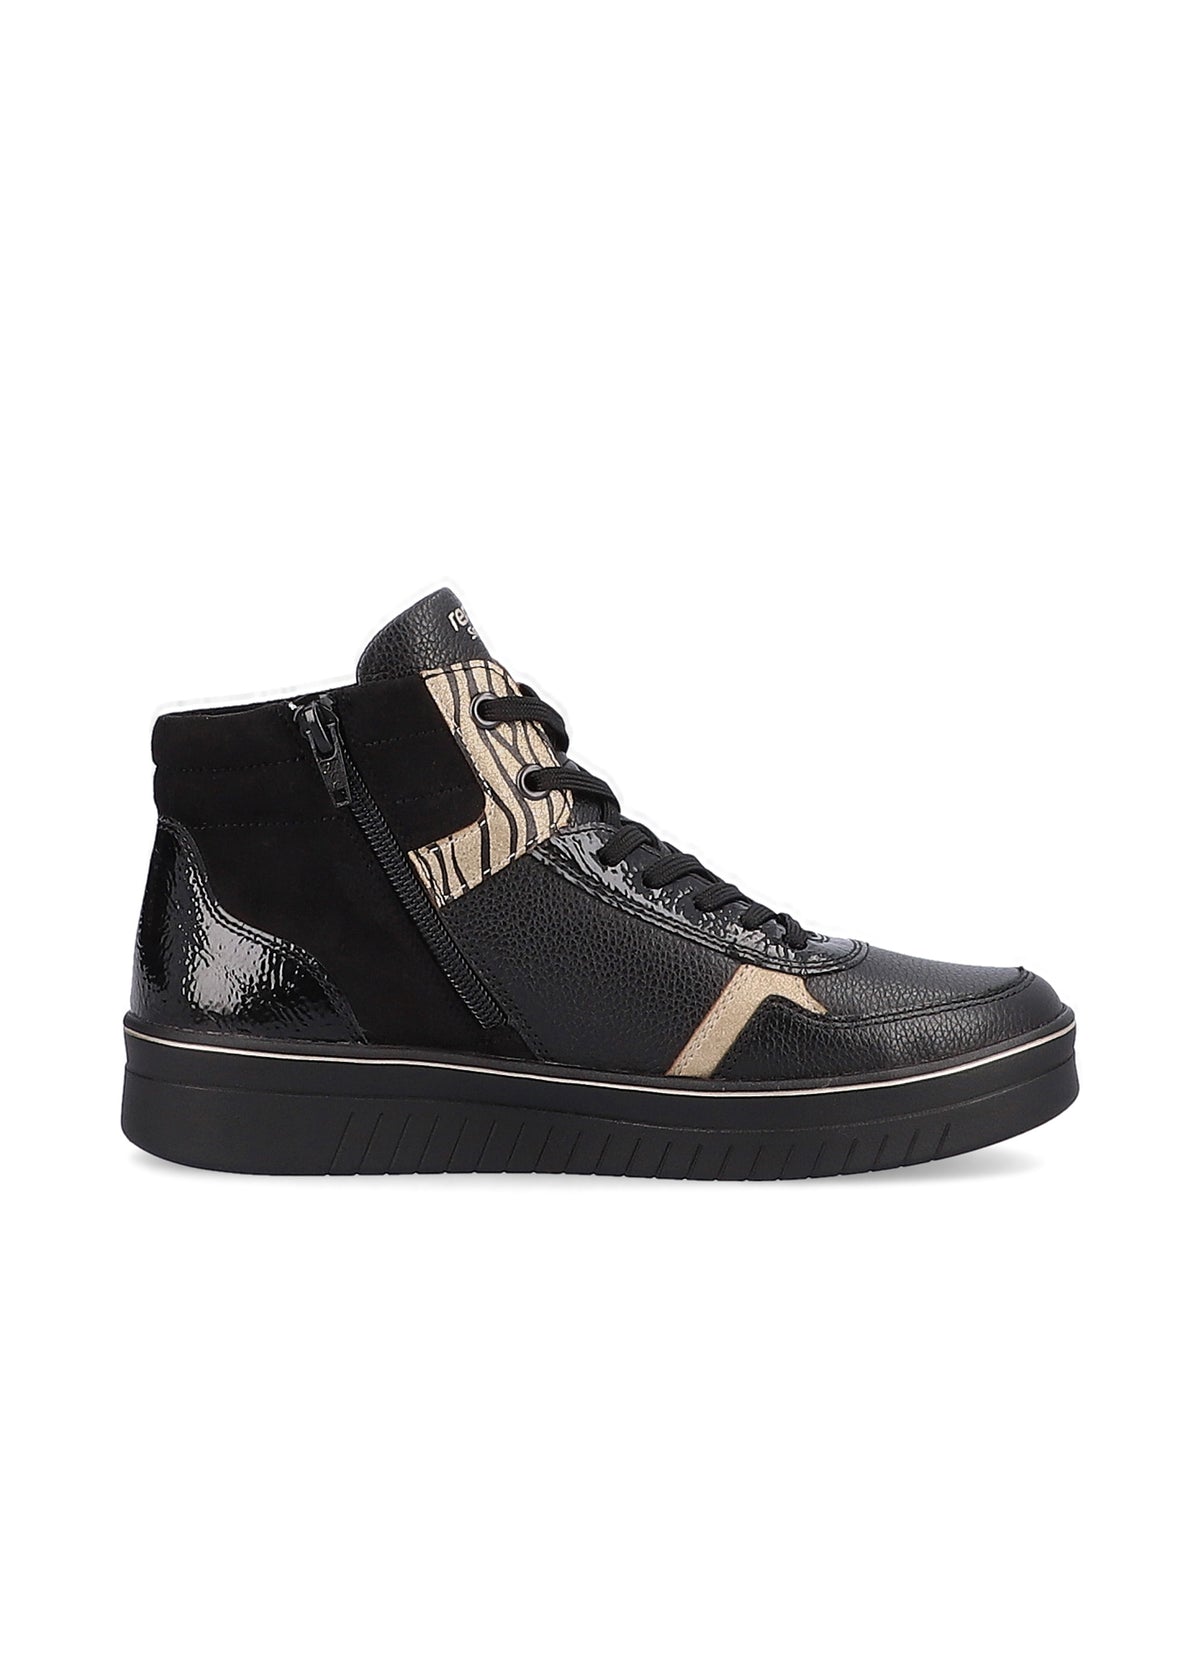 Sneakers with handles - black, gold zebra